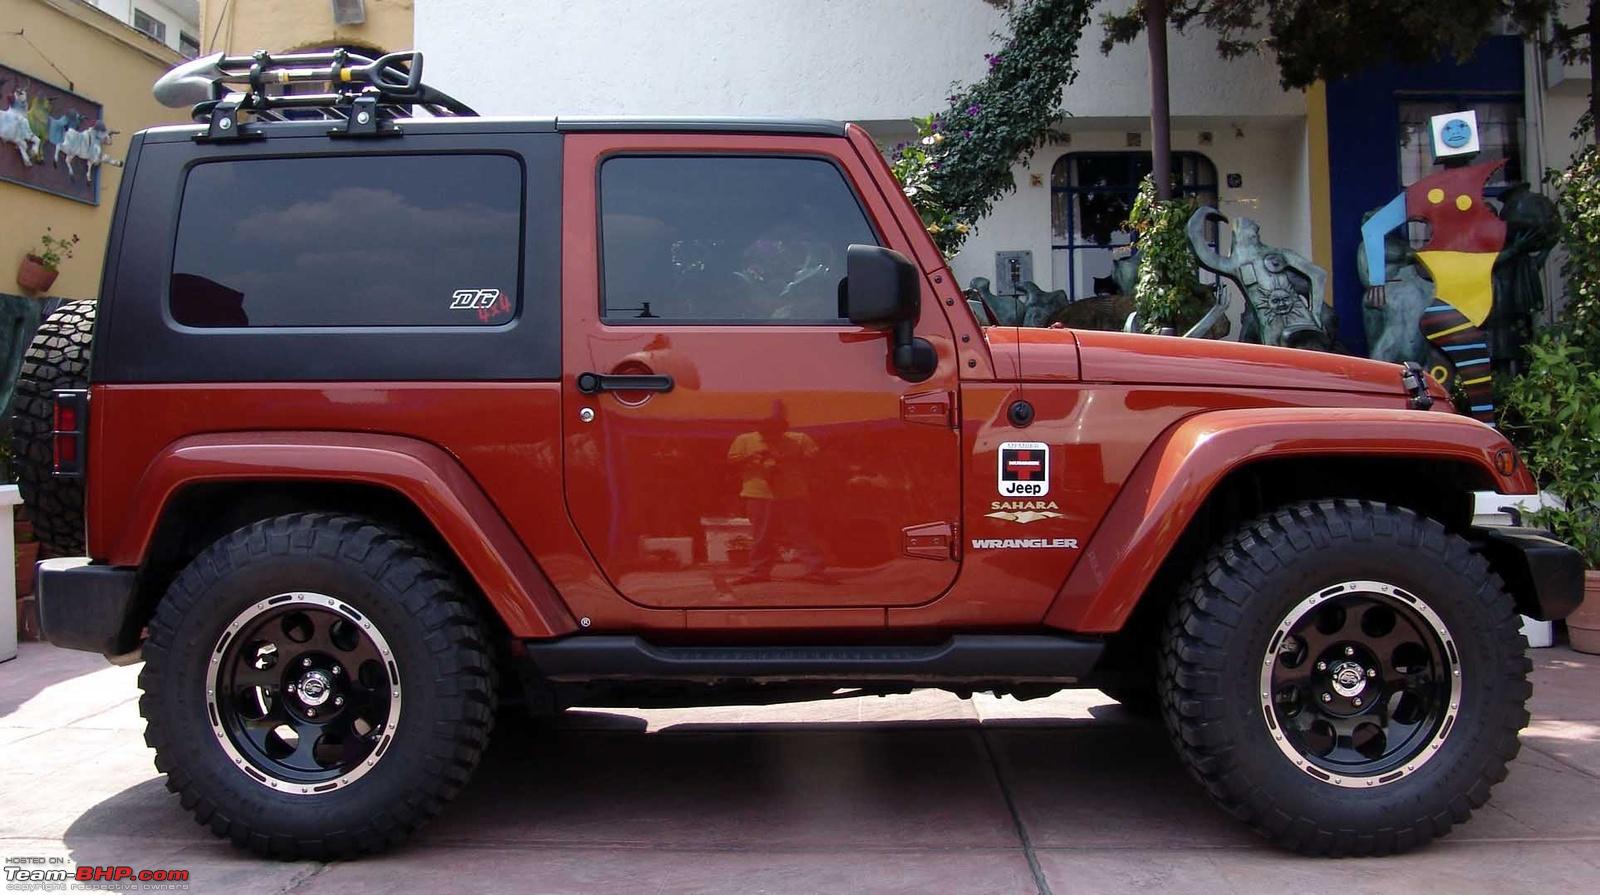 2009 Jeep wrangler colors options #4